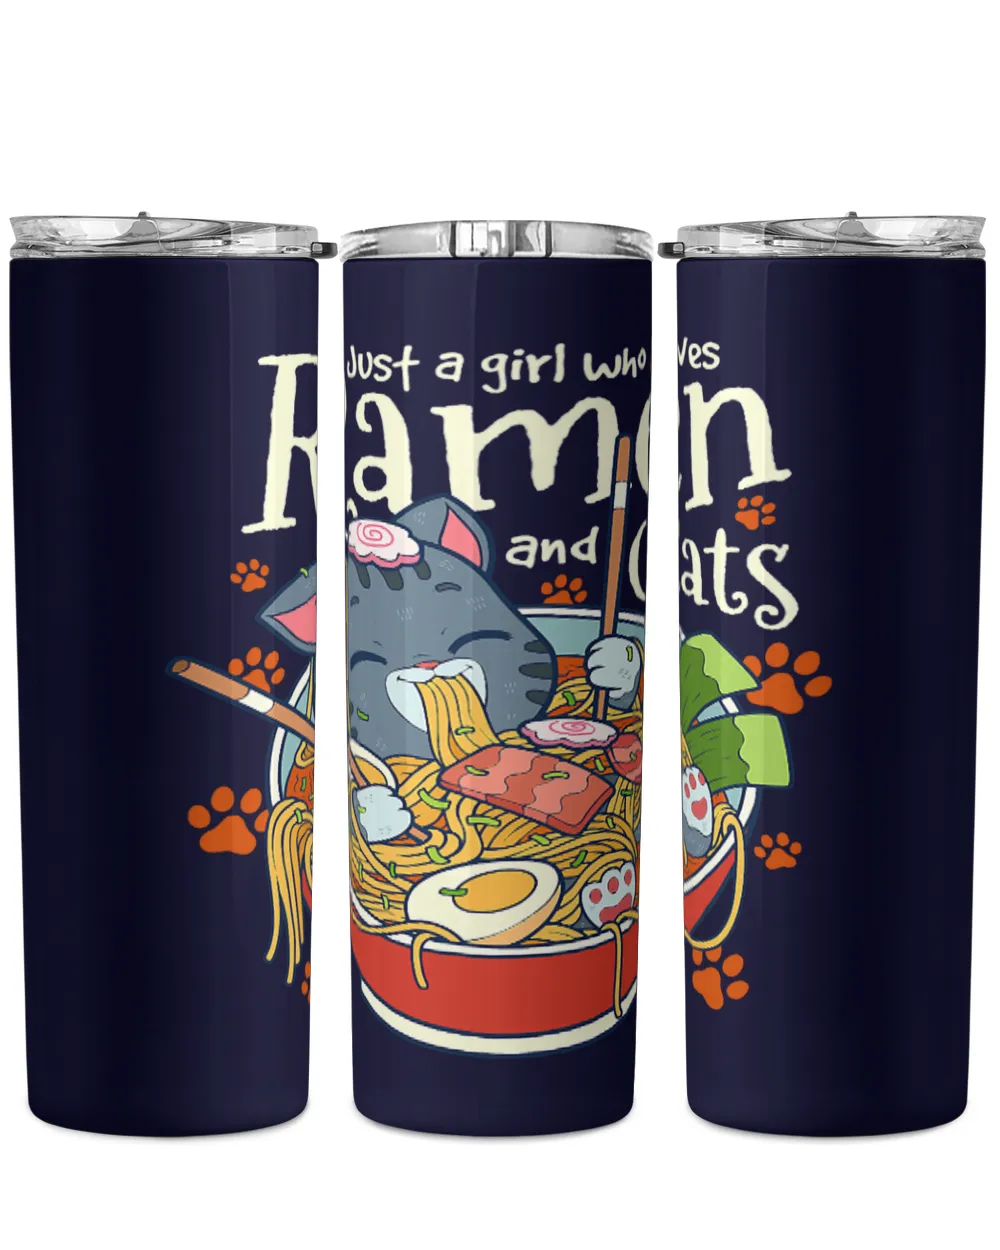 Cat Paws Kawaii Cute Anime Cat Girl Otaku Japanese Ramen Noodles Gift 223